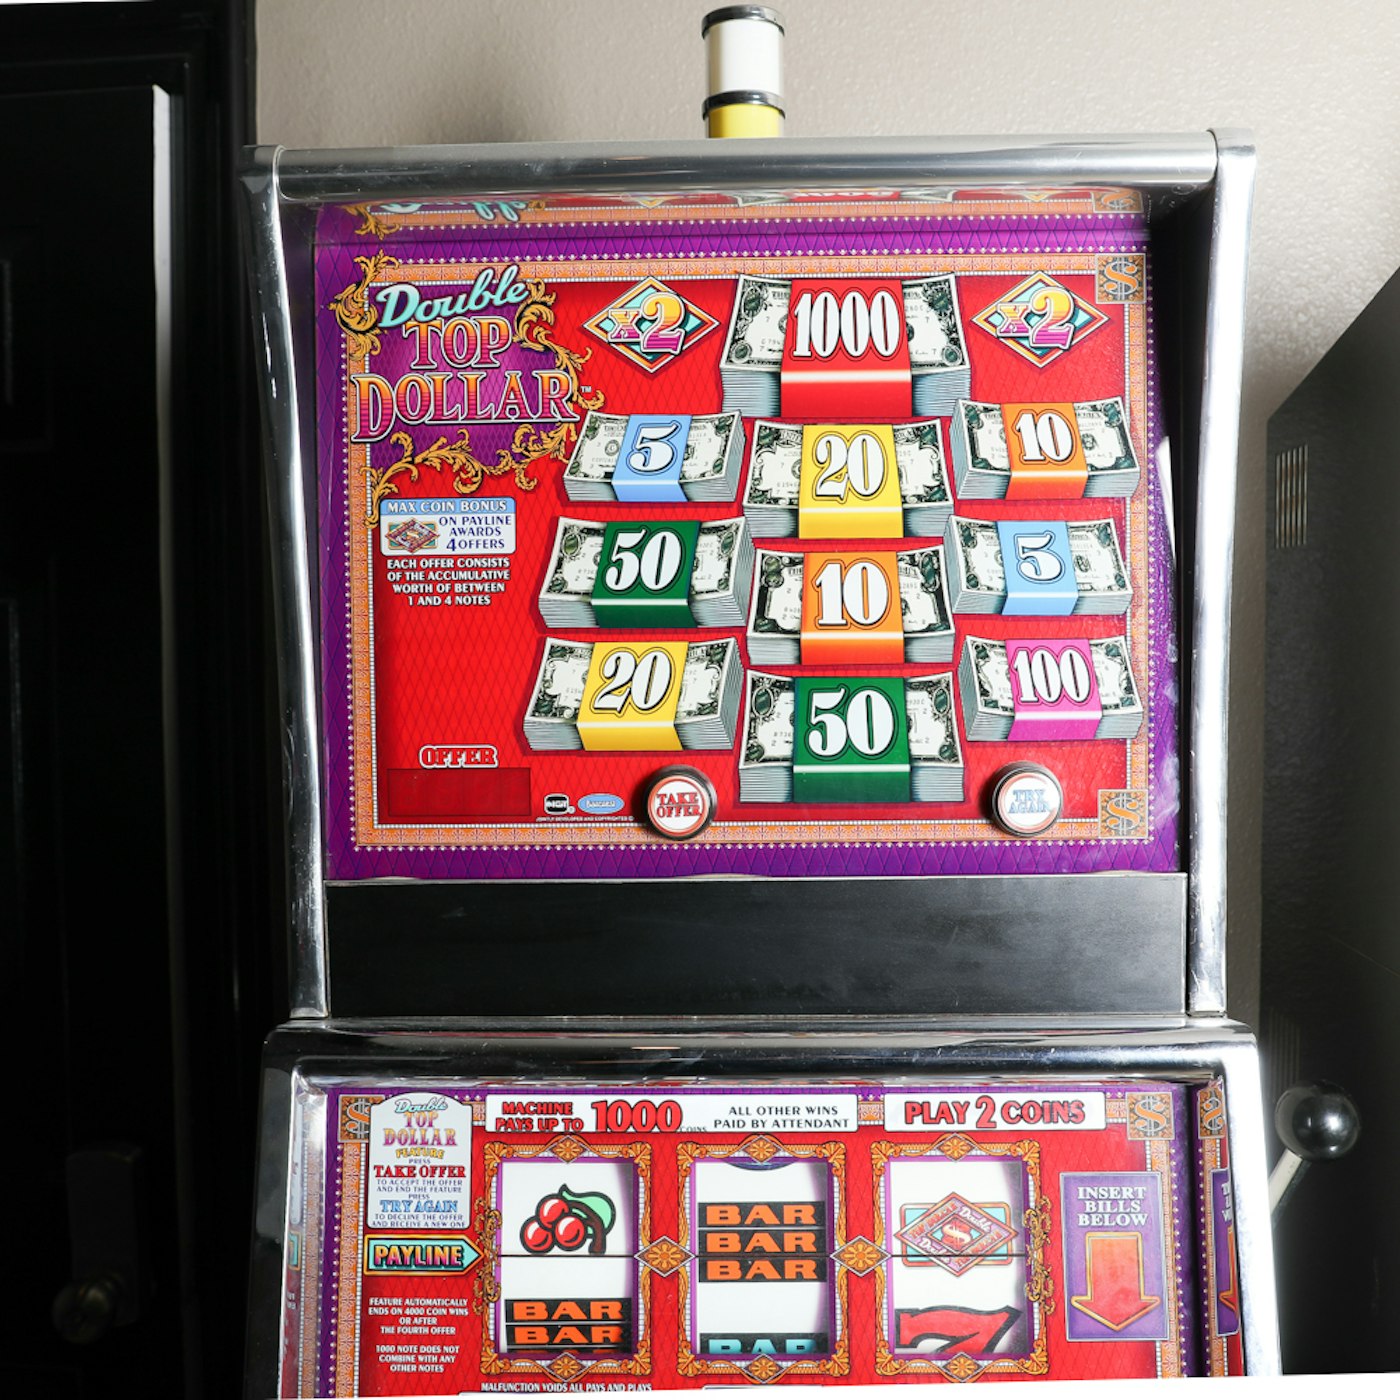 Double top dollar slot machines